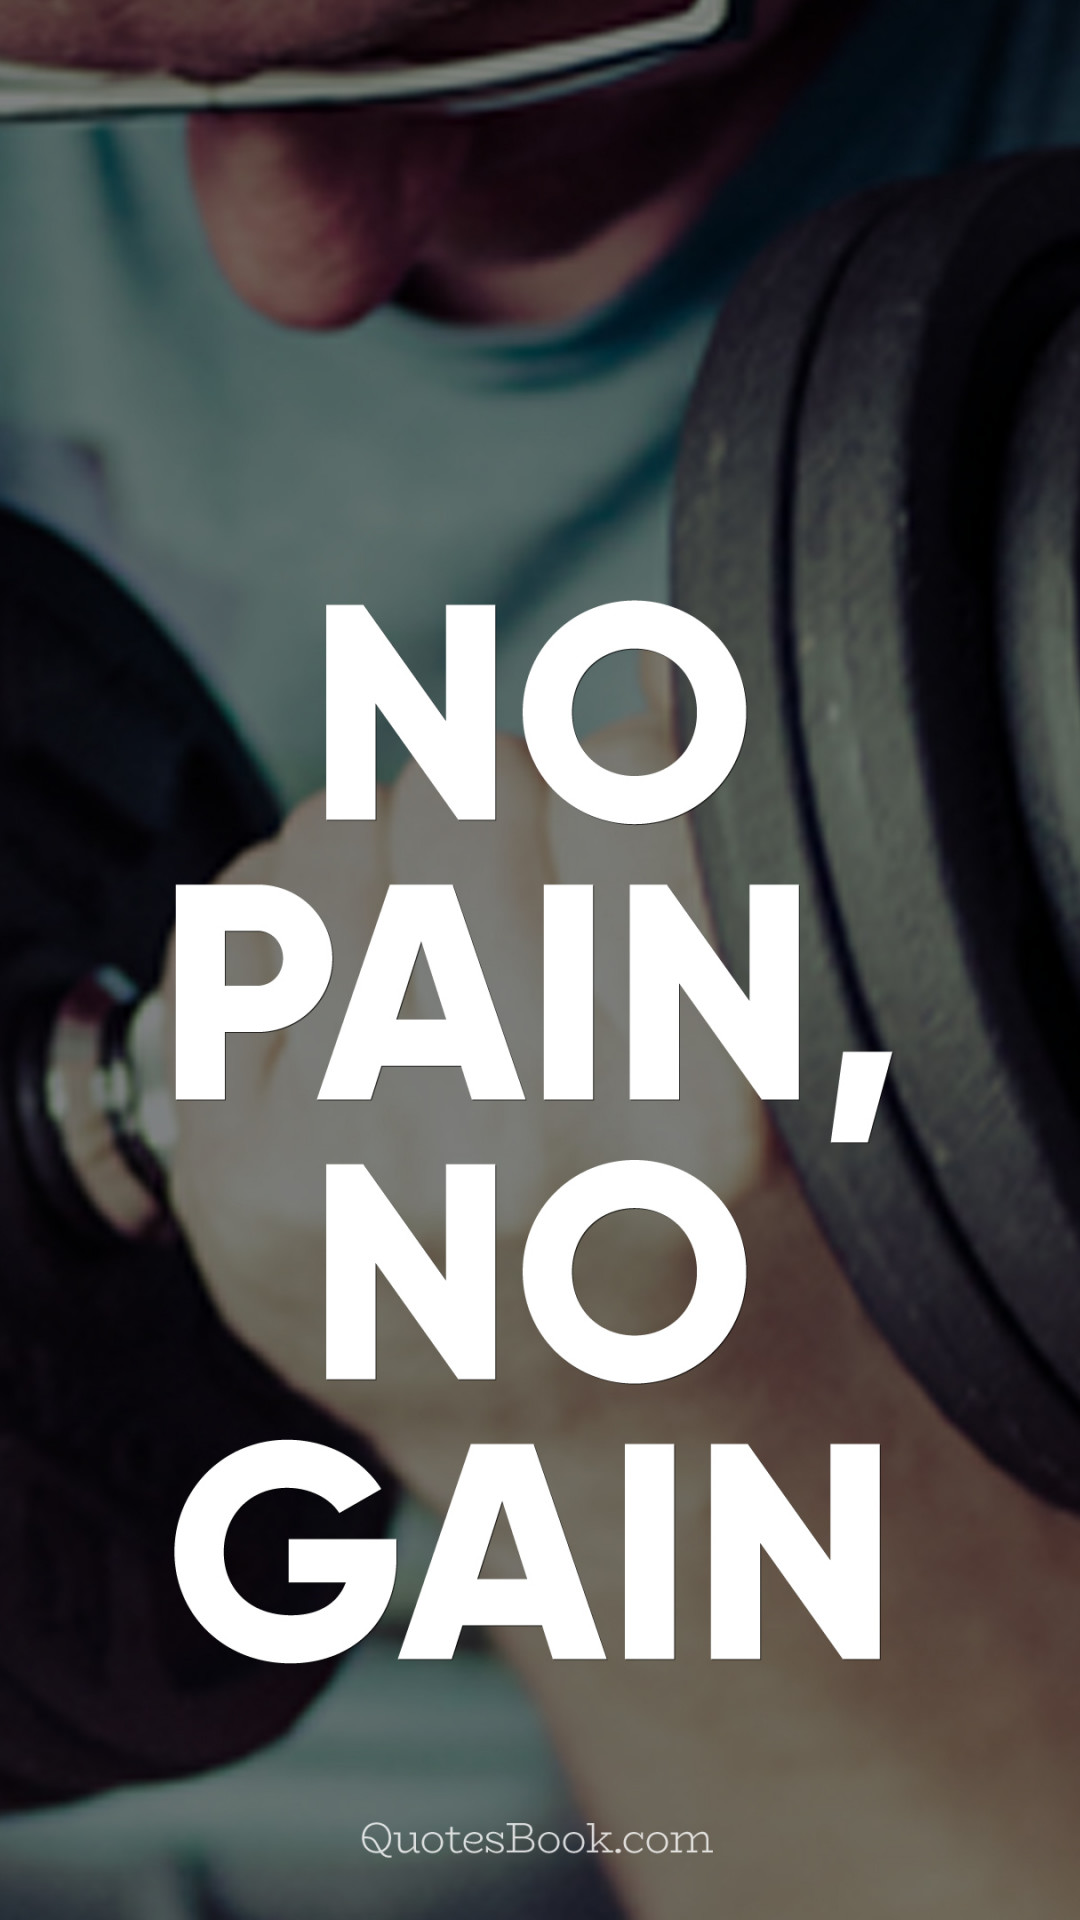 No pain, no gain - QuotesBook